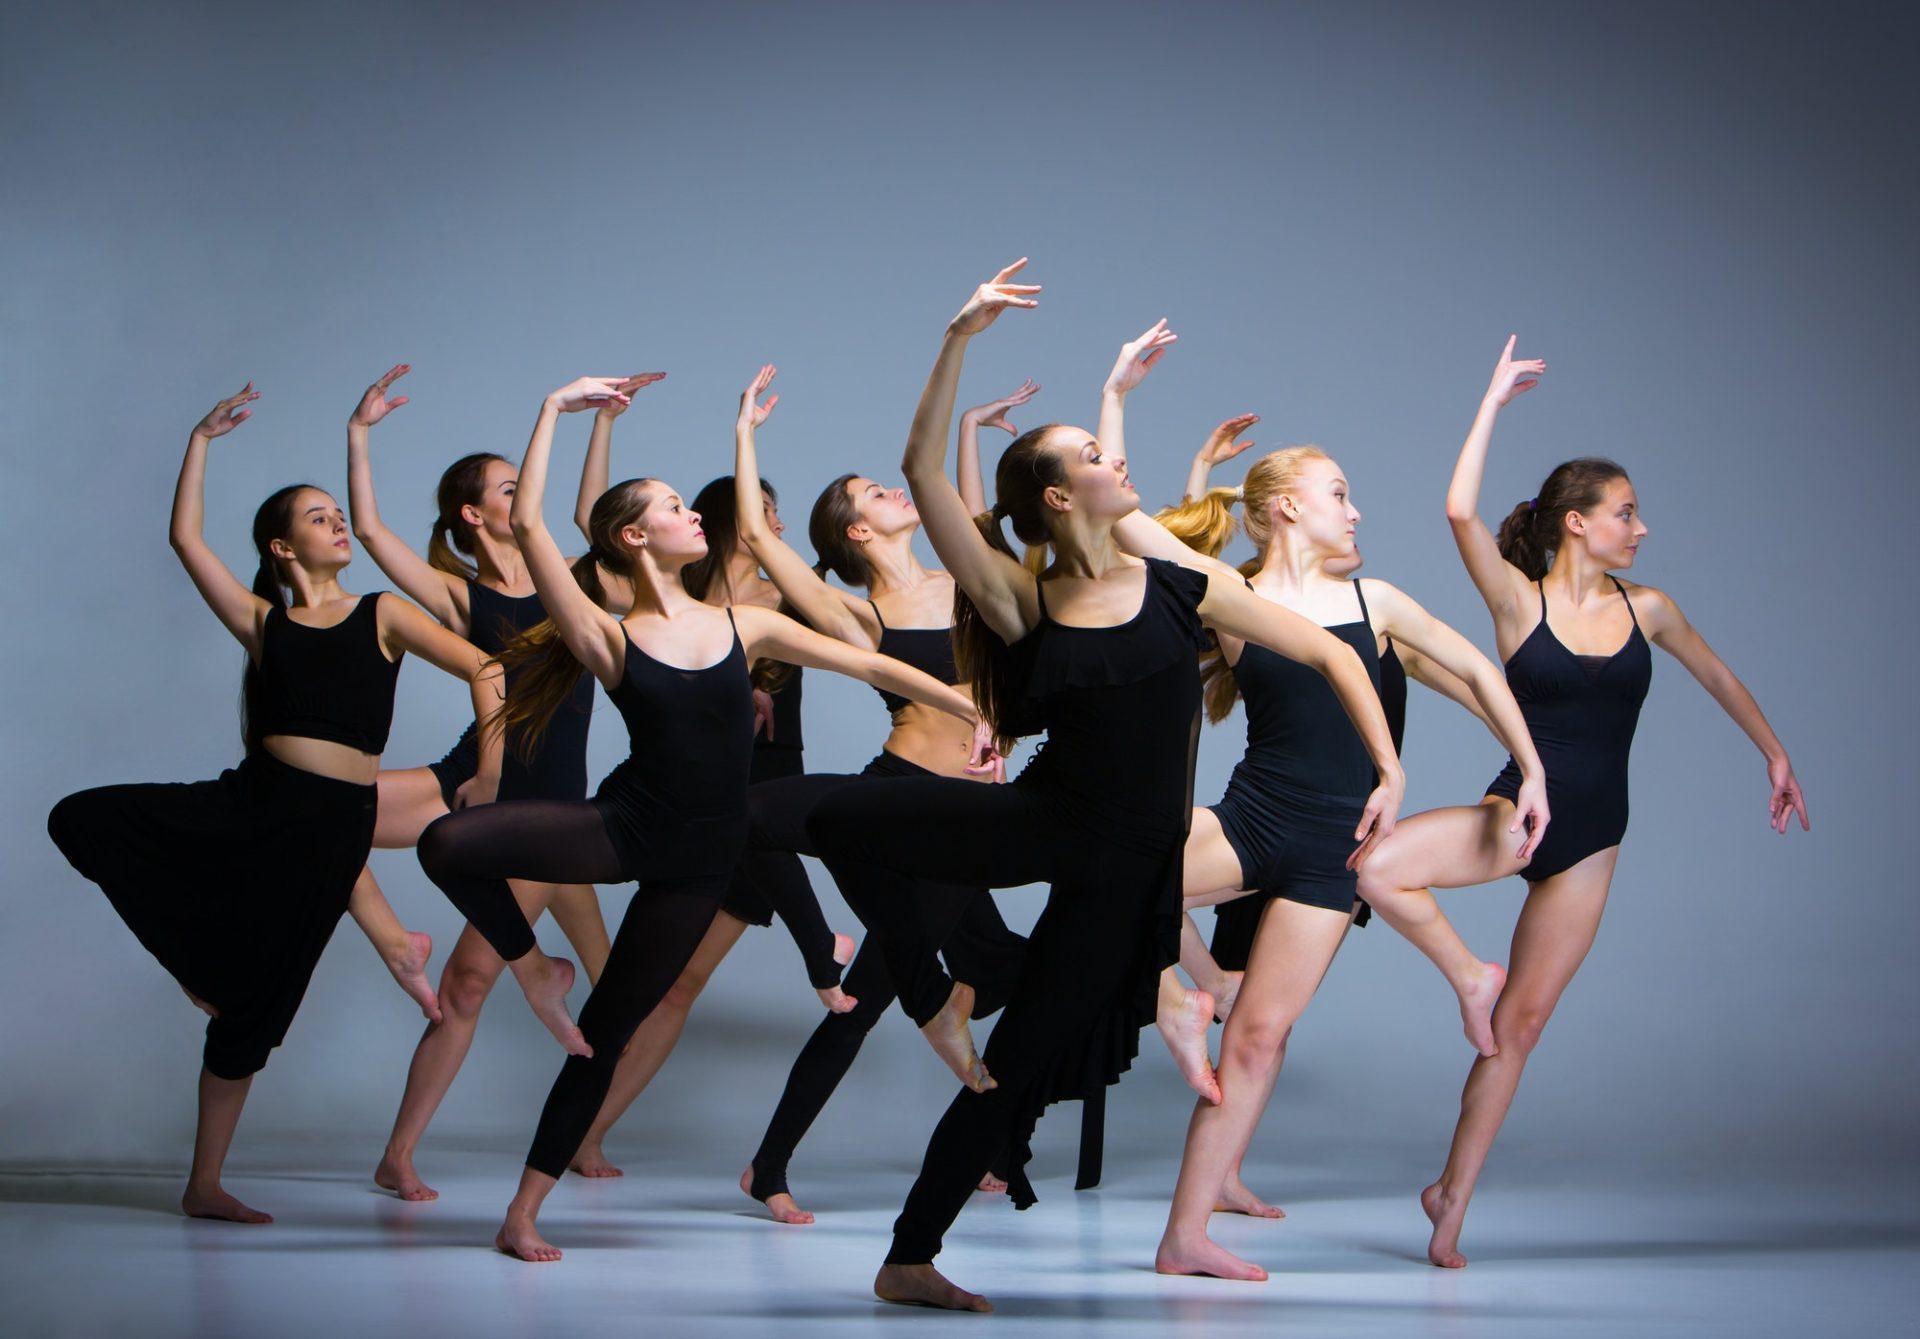 the-group-of-modern-ballet-dancers.jpg